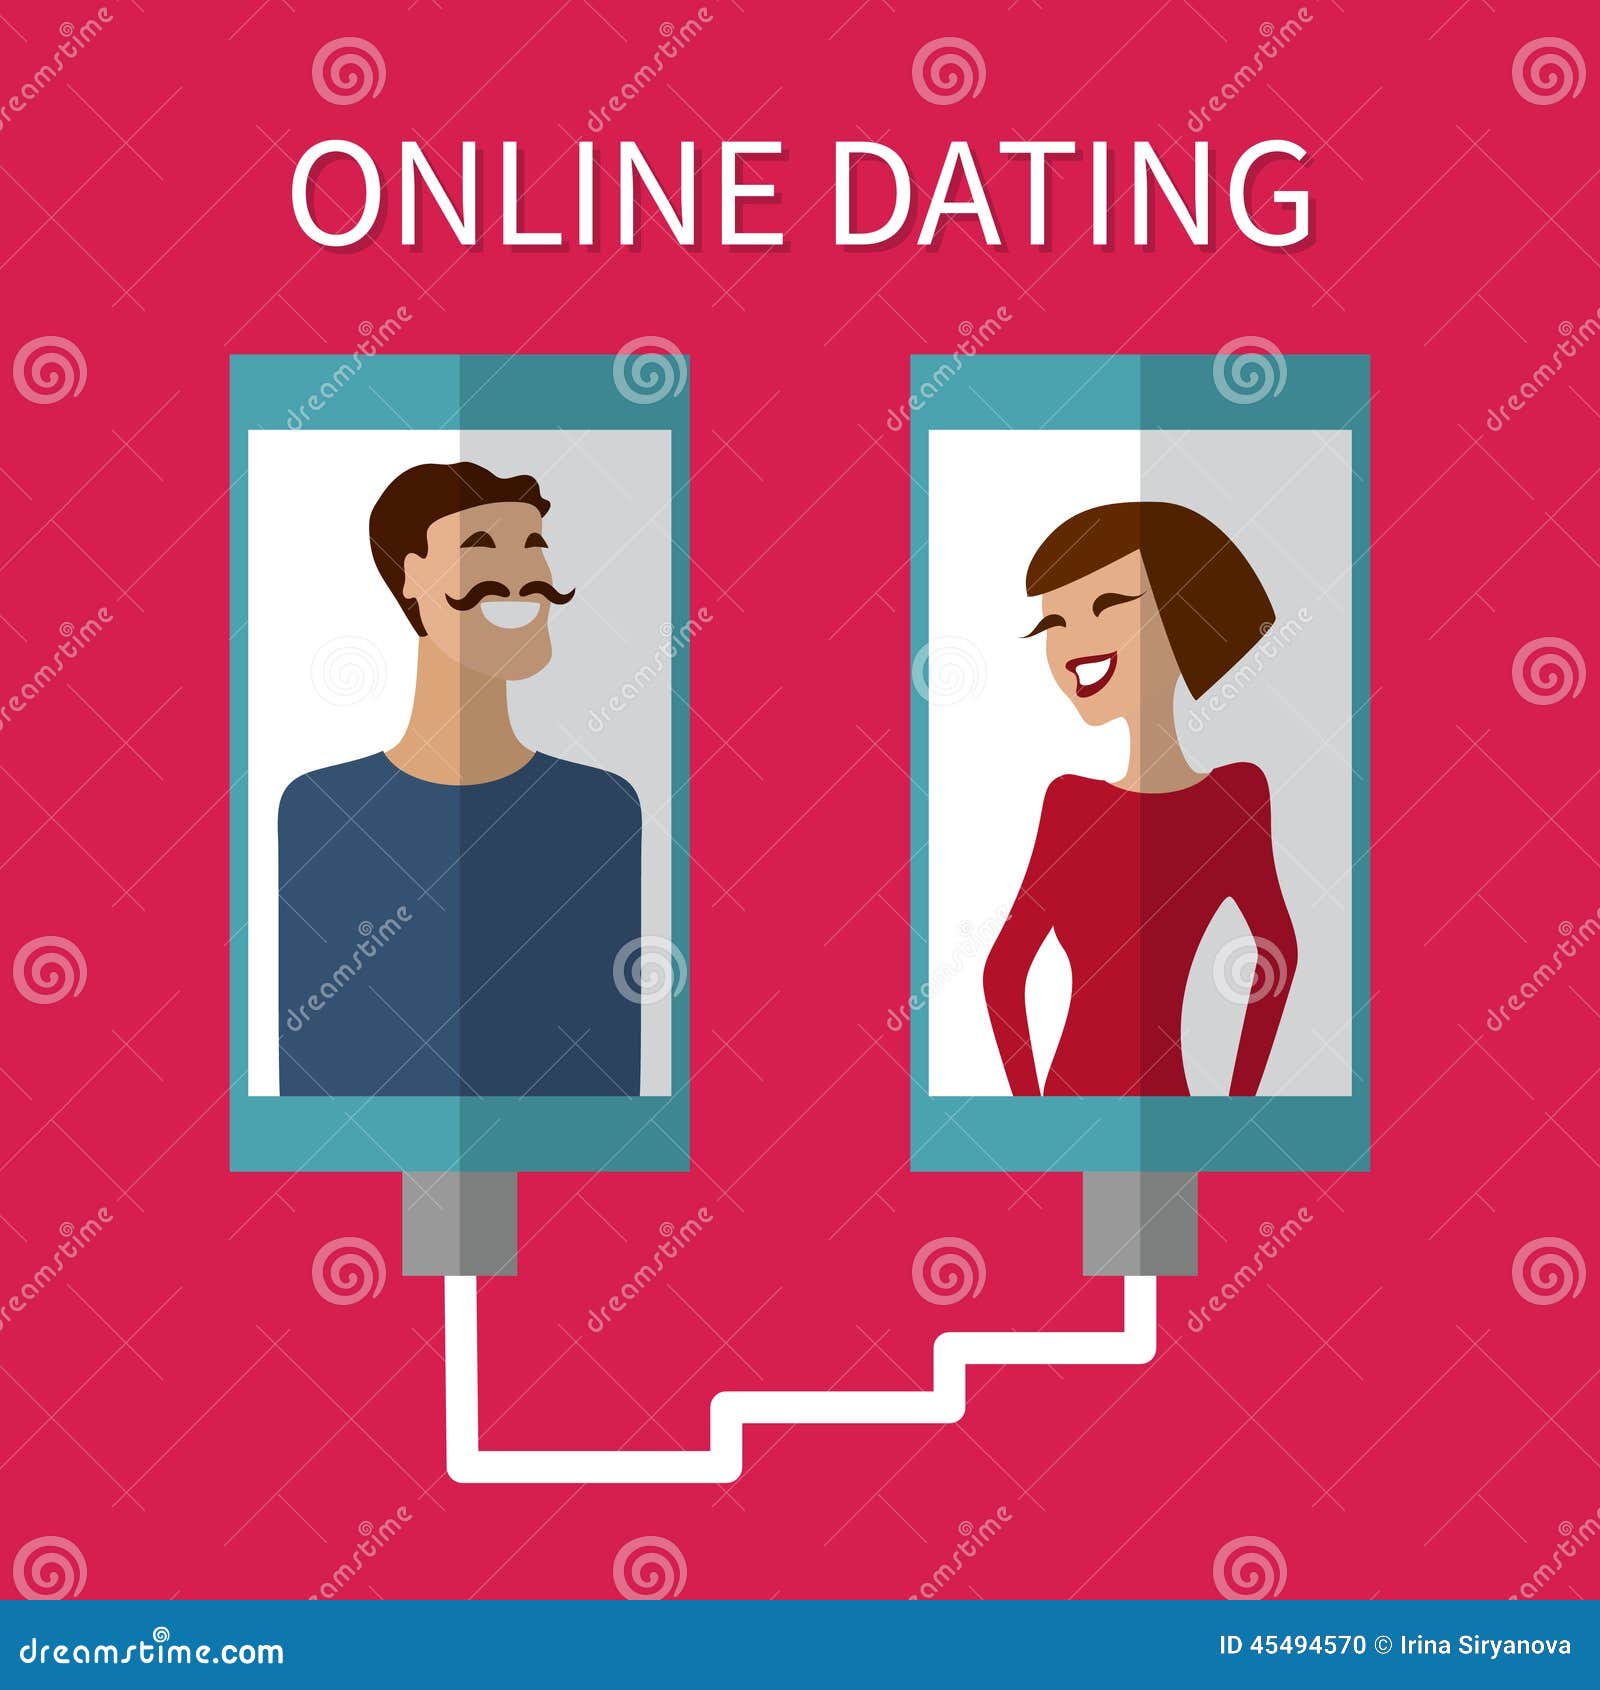 Best Free Dating Sites - AskMen